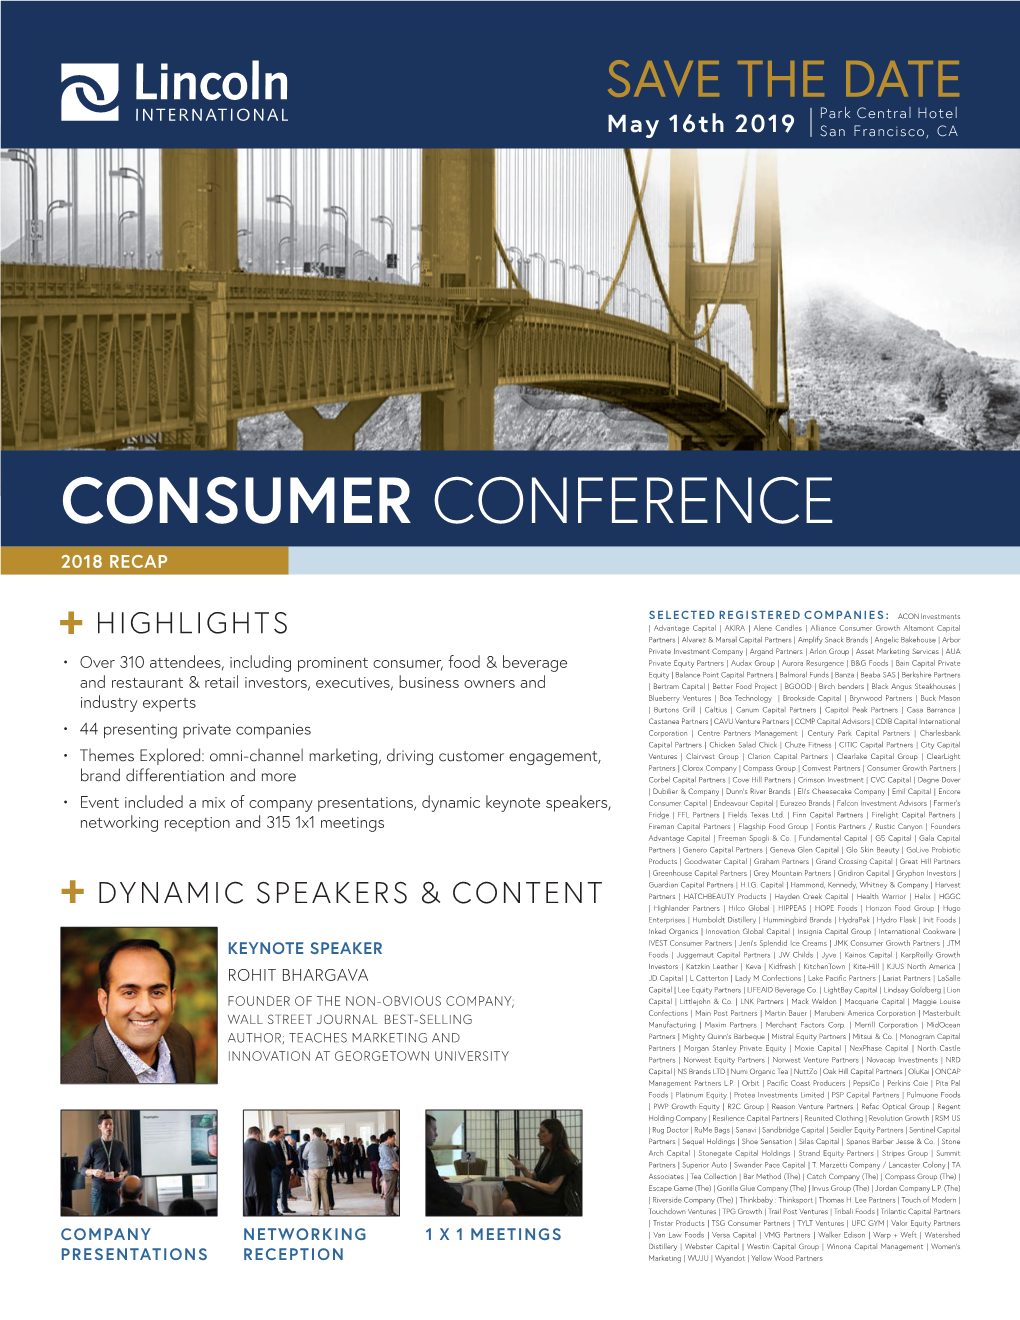 Consumer Conference 2018 Recap